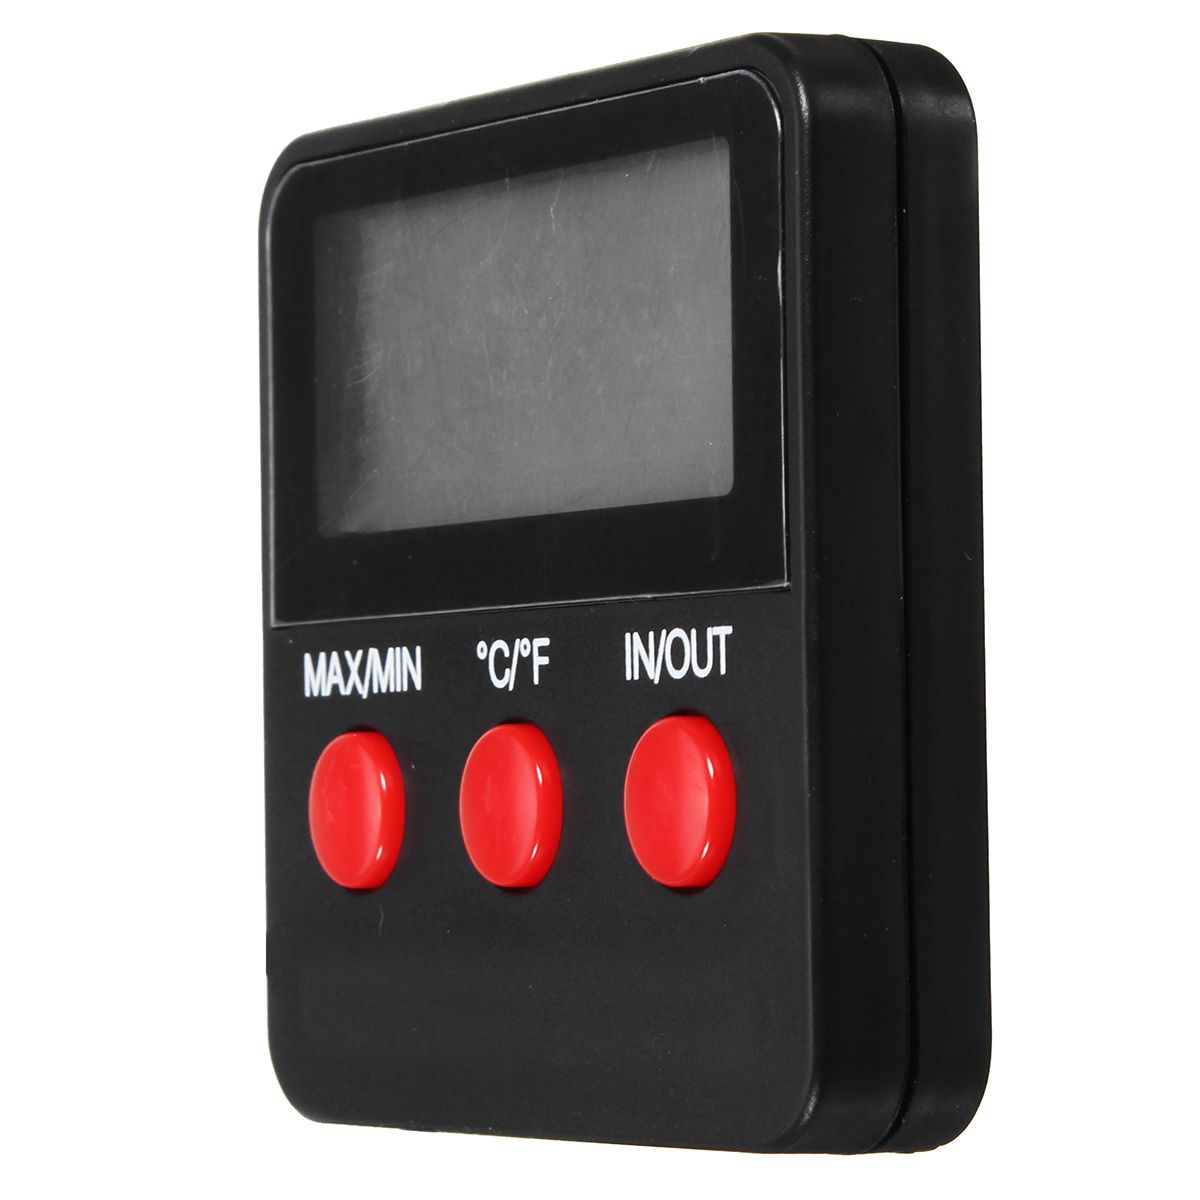 Digital-Thermometer-Hygrometer-Humidity-Meter-Probe-for-Egg-Incubator-Pet-1207923